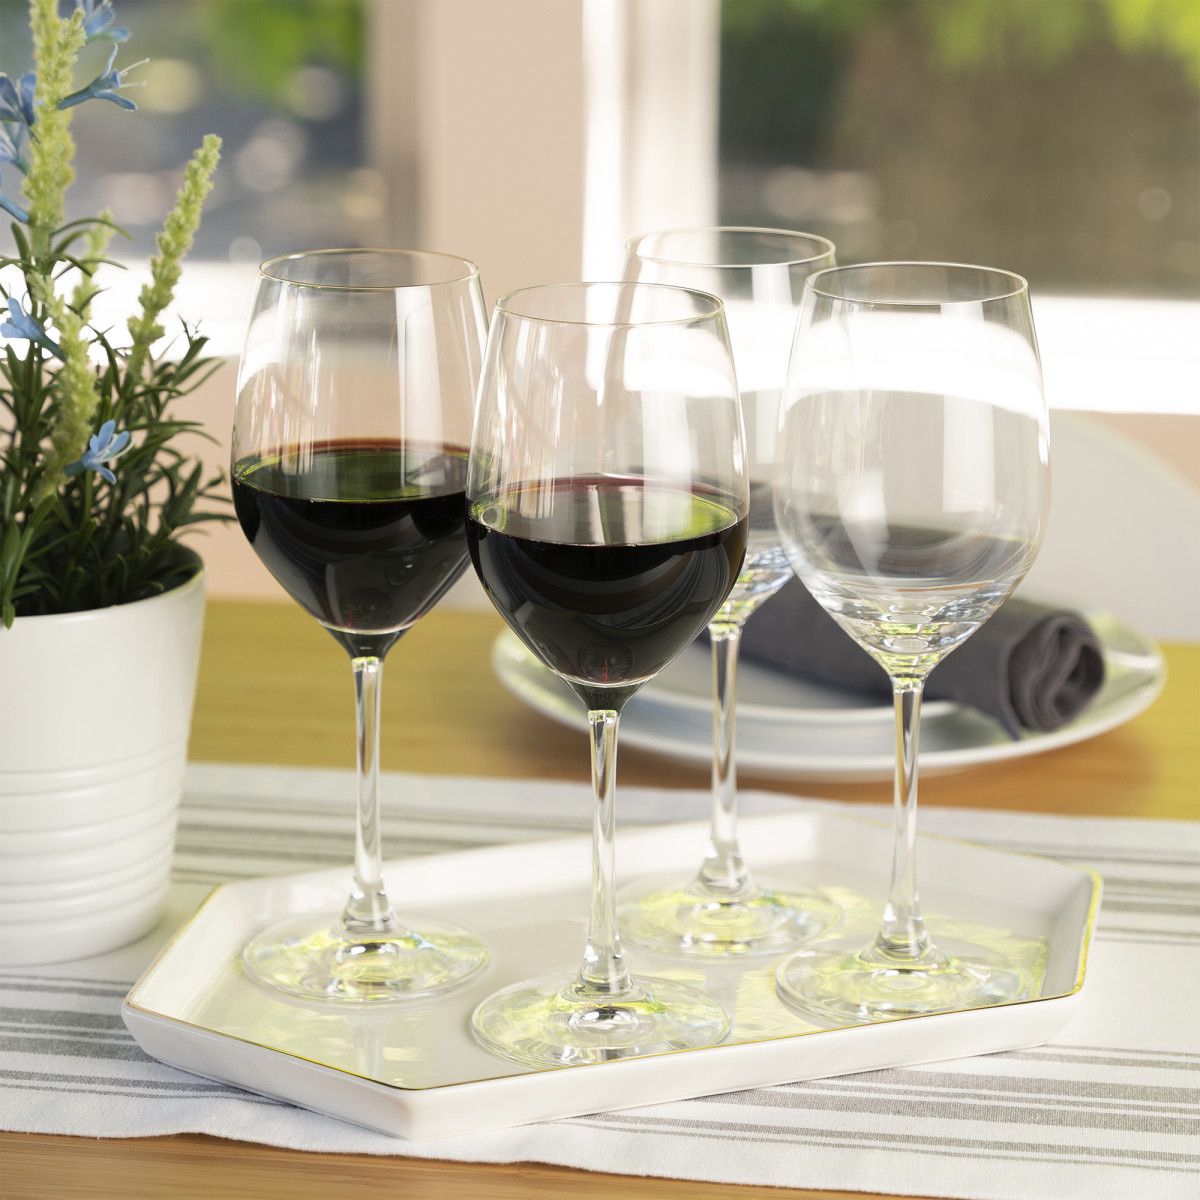 Spiegelau Spiegelau Vino Grande Red Wine Glass, 15 oz, Set of 4 - lily & onyx